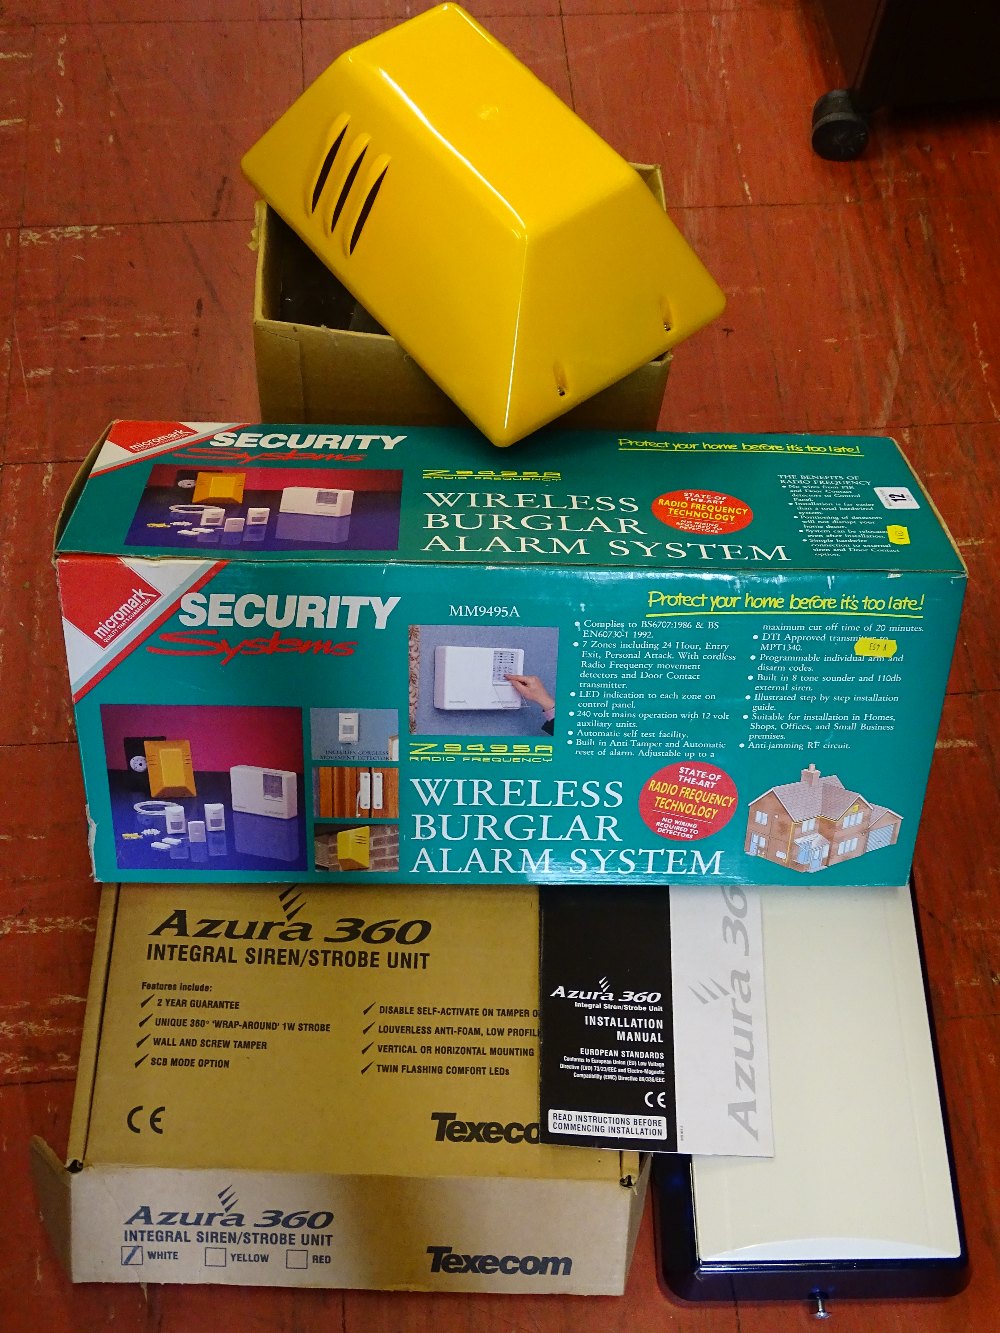 Micromark security system wireless burglar alarm and an Azura 360 siren strobe unit etc